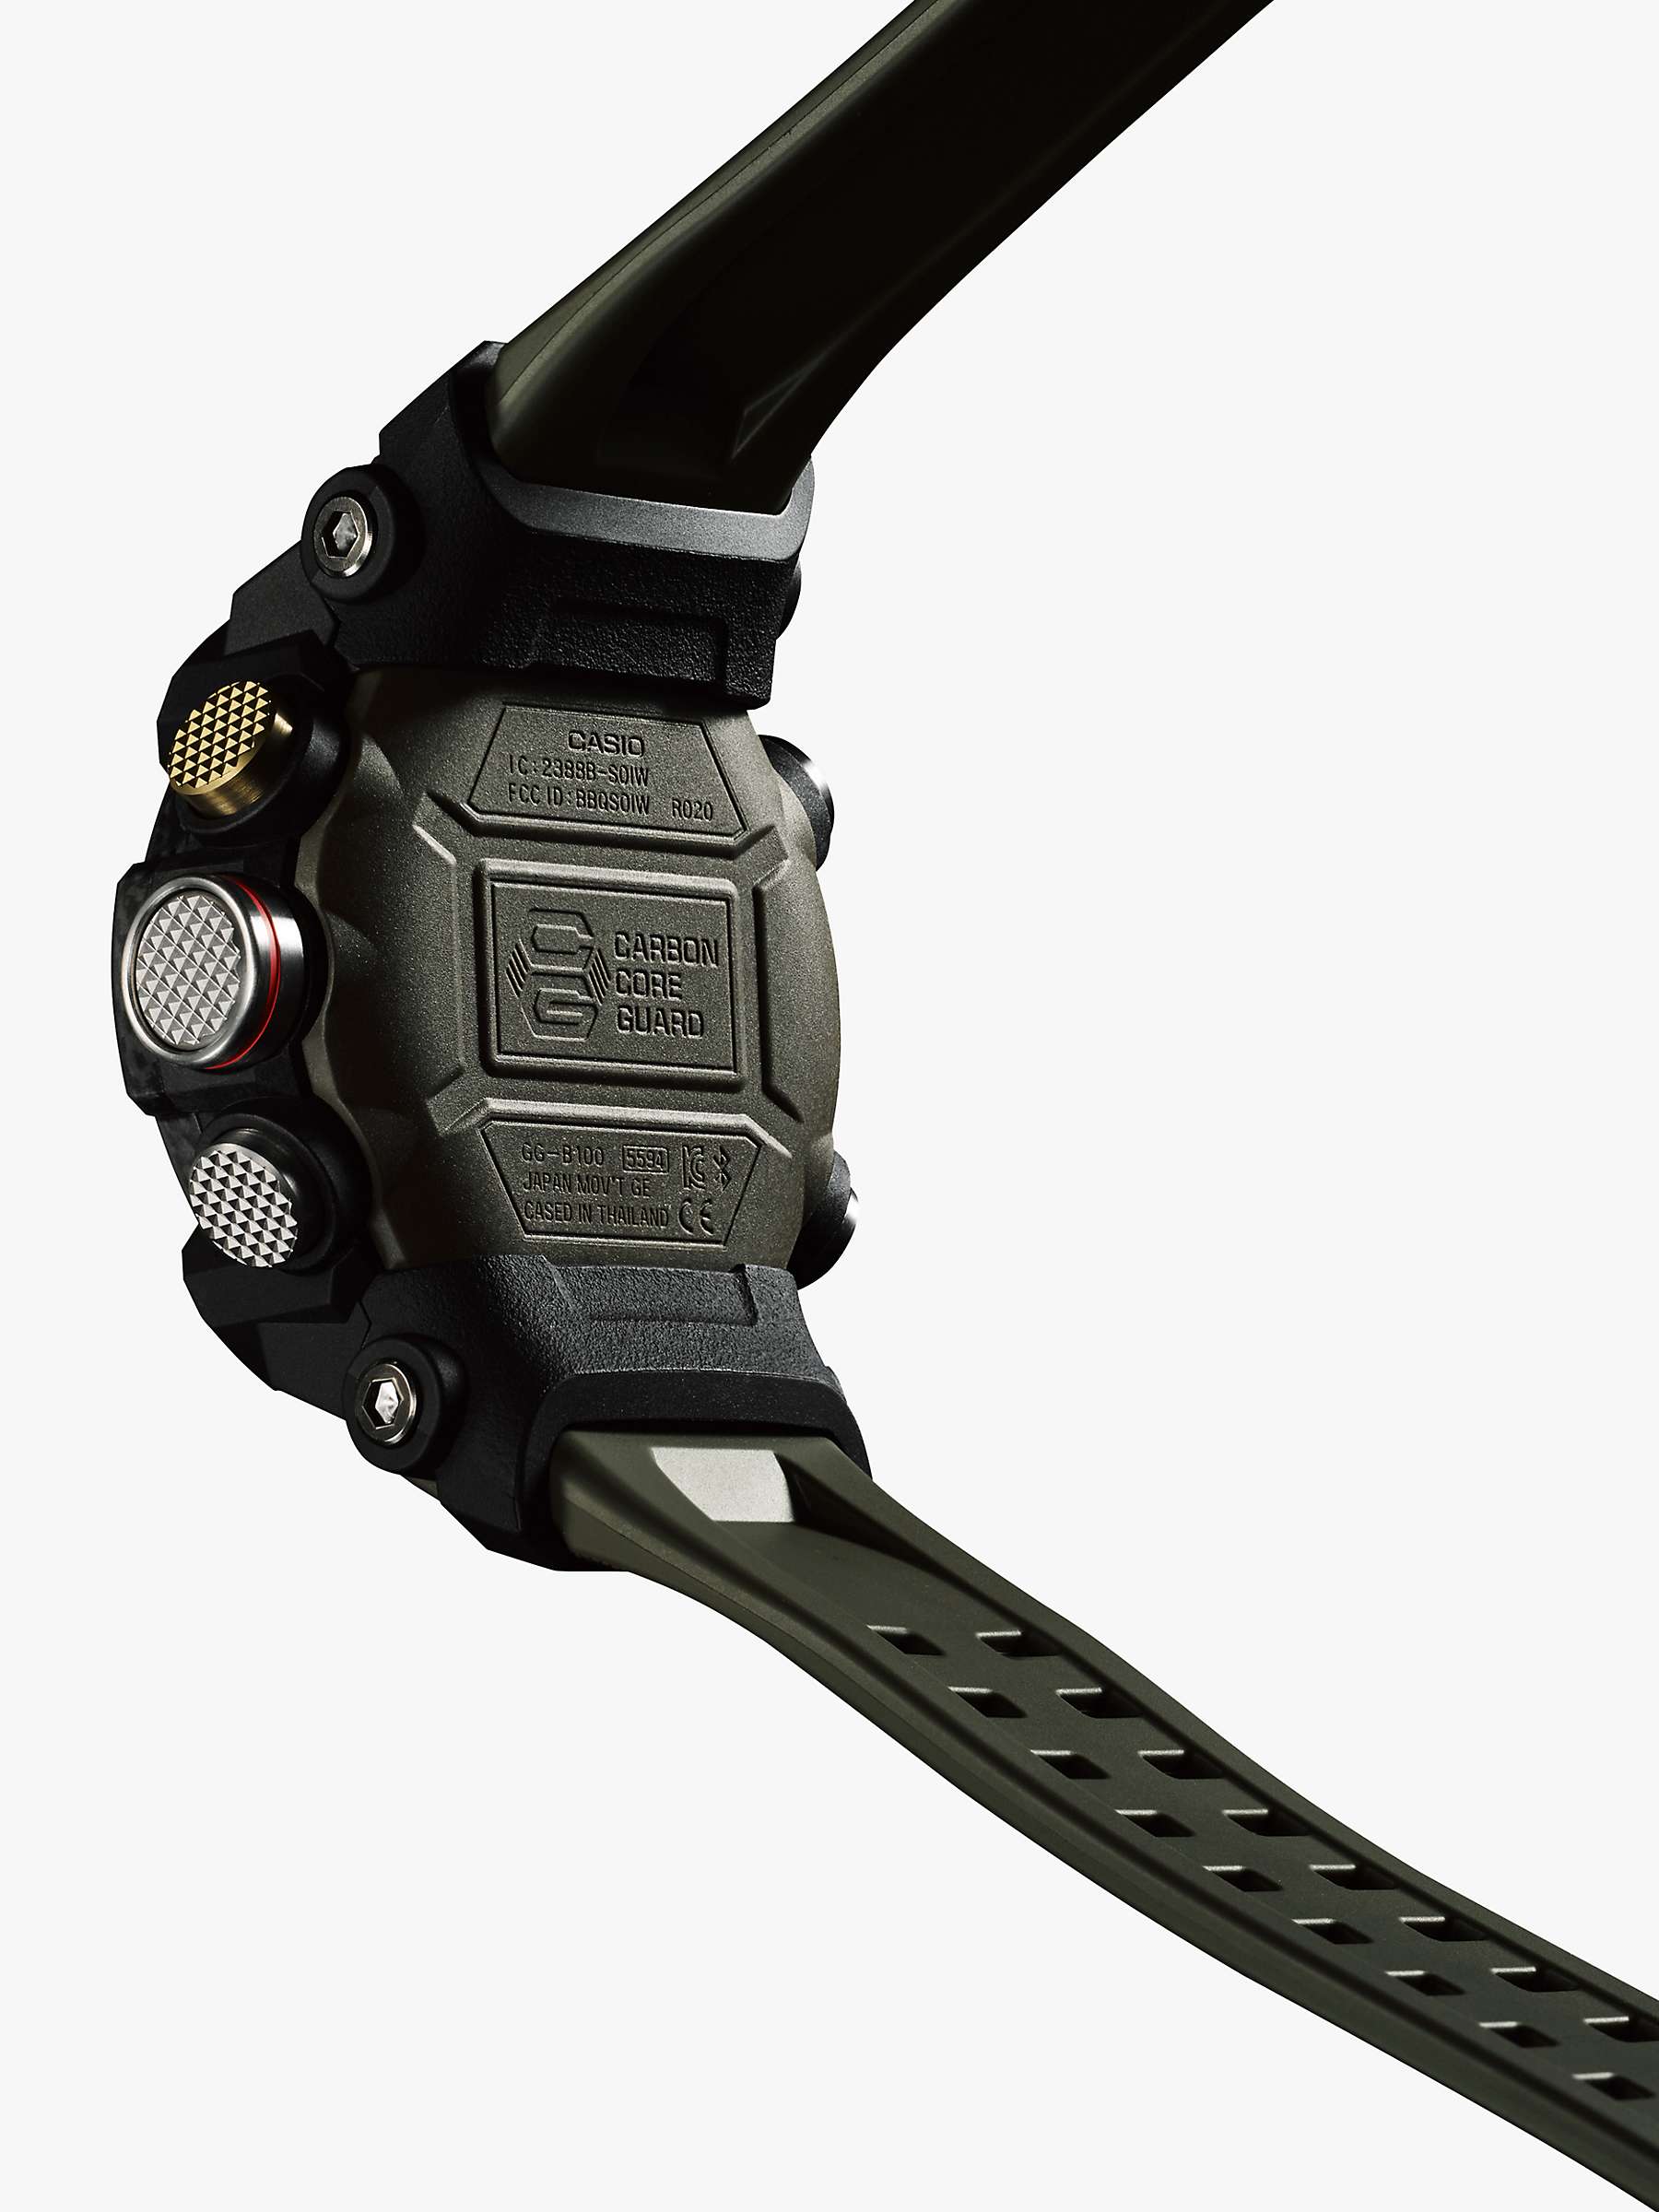 Buy G-Shock Men's Master of G Mudmaster Bluetooth Day Resin Strap Watch Online at johnlewis.com